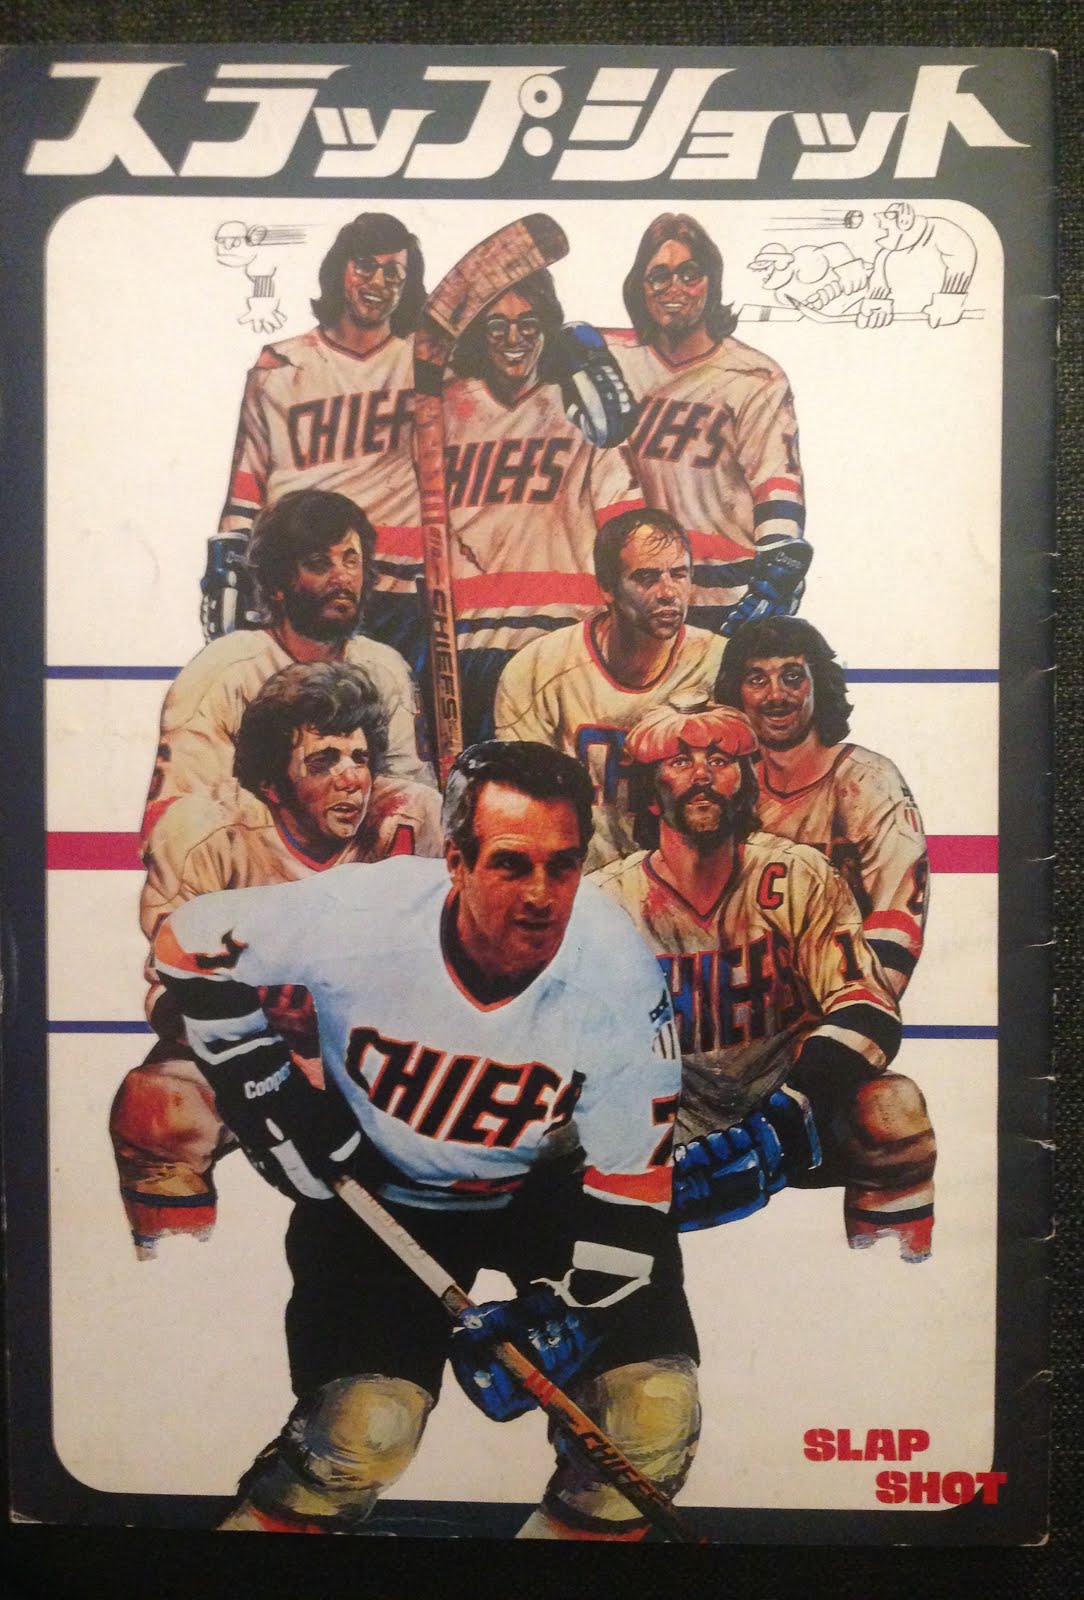 Documentary on '74-75 Flyers hits mark